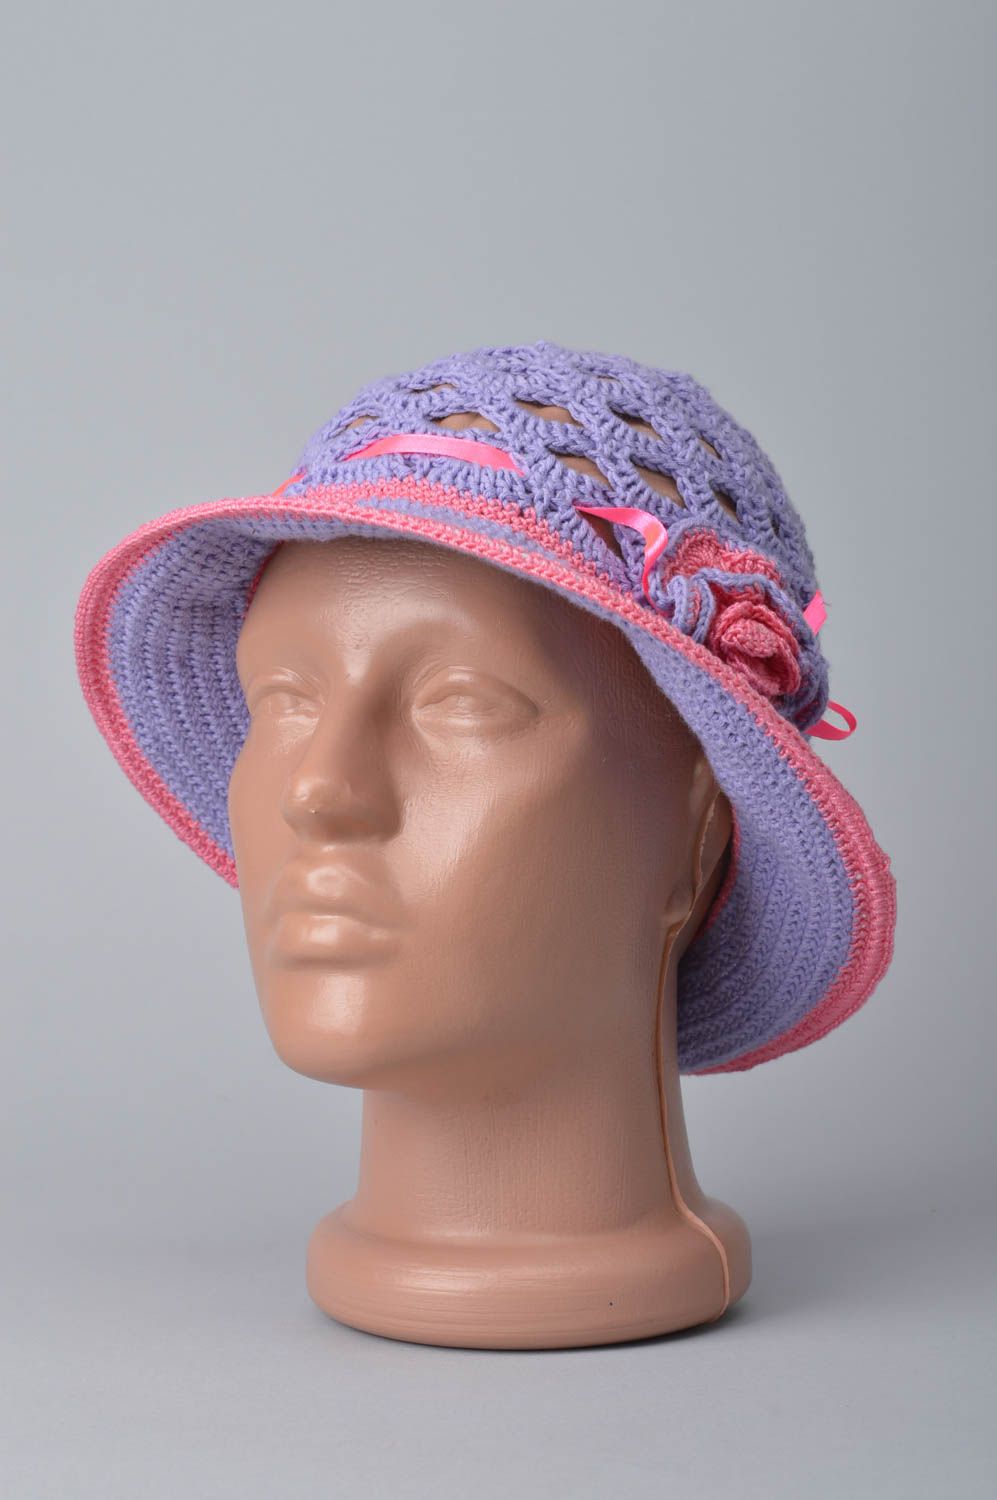 Beautiful handmade crochet hat baby hat fashion kids accessories for girls photo 1